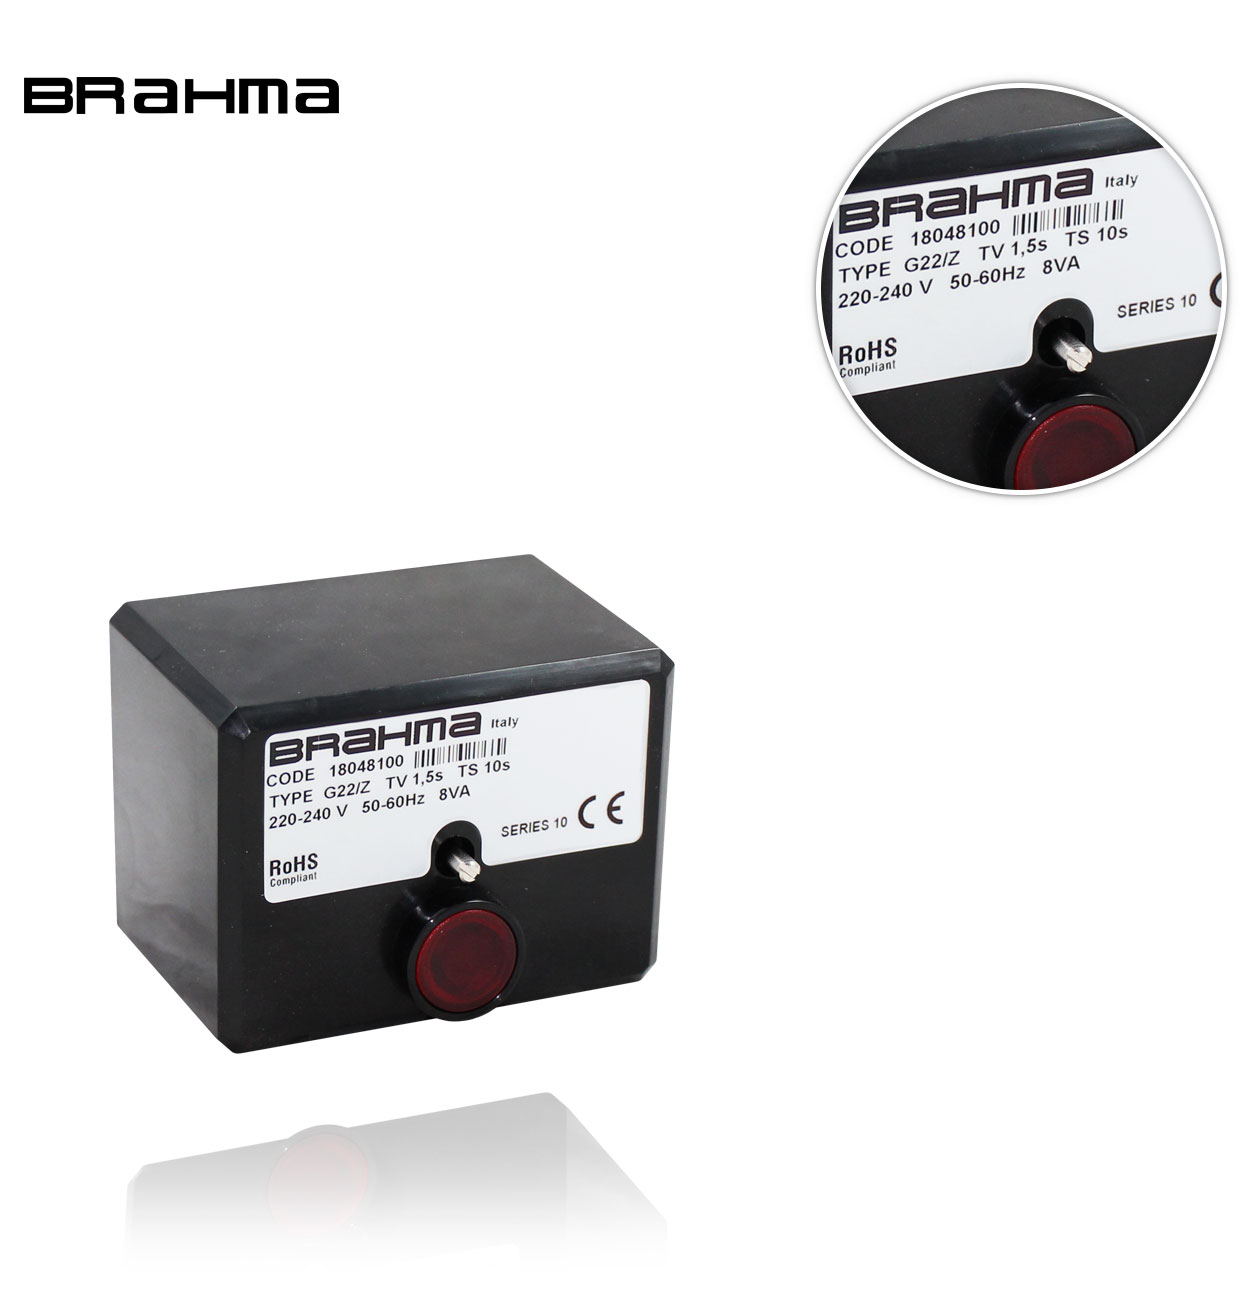 G 22/Z  TW1.5  TS10 BRAHMA CONTROL BOX